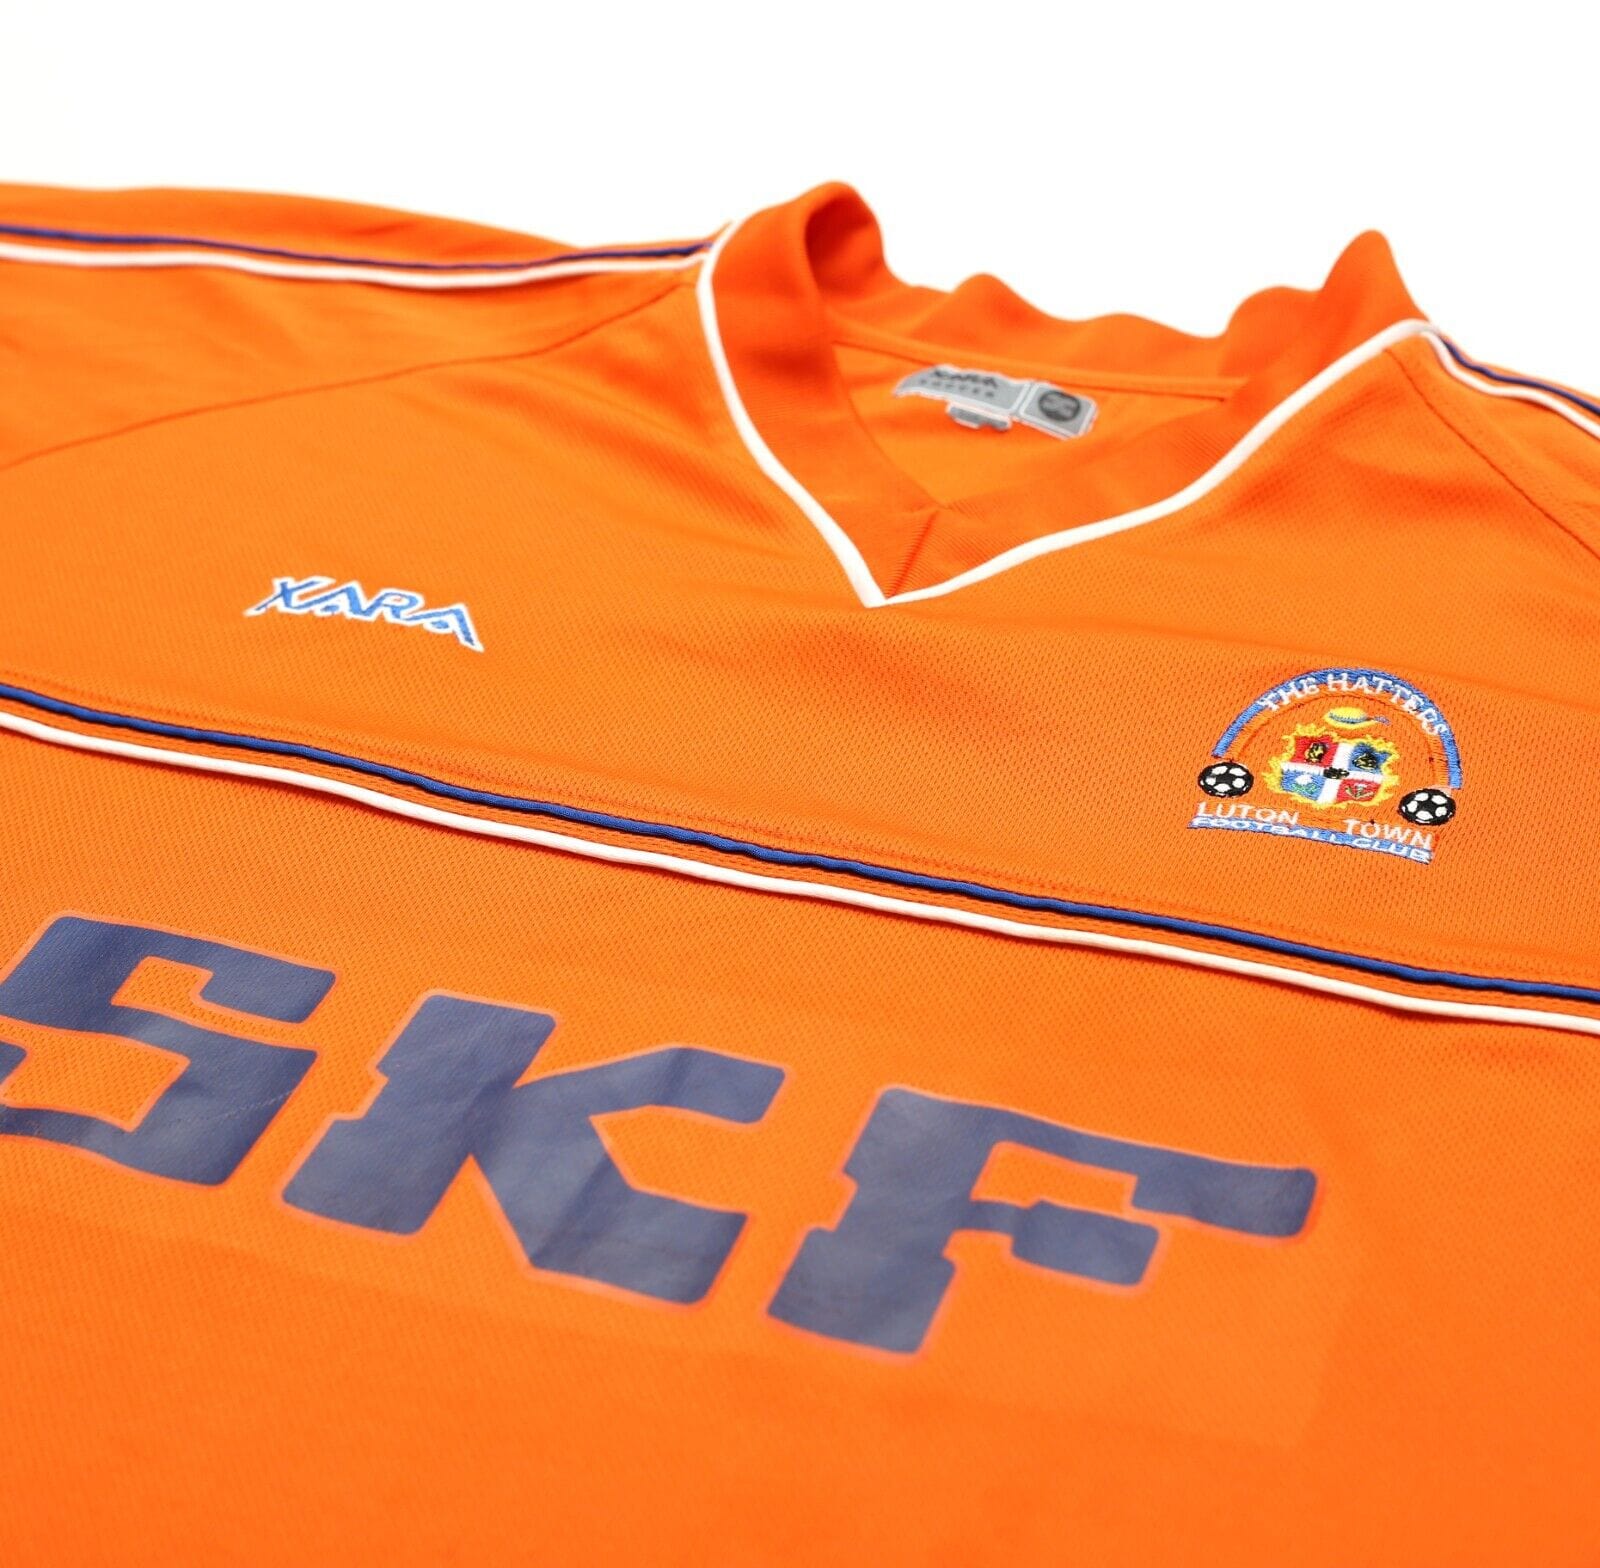 2001/03 LUTON TOWN Vintage XARA Third Football Shirt (XL) 3rd